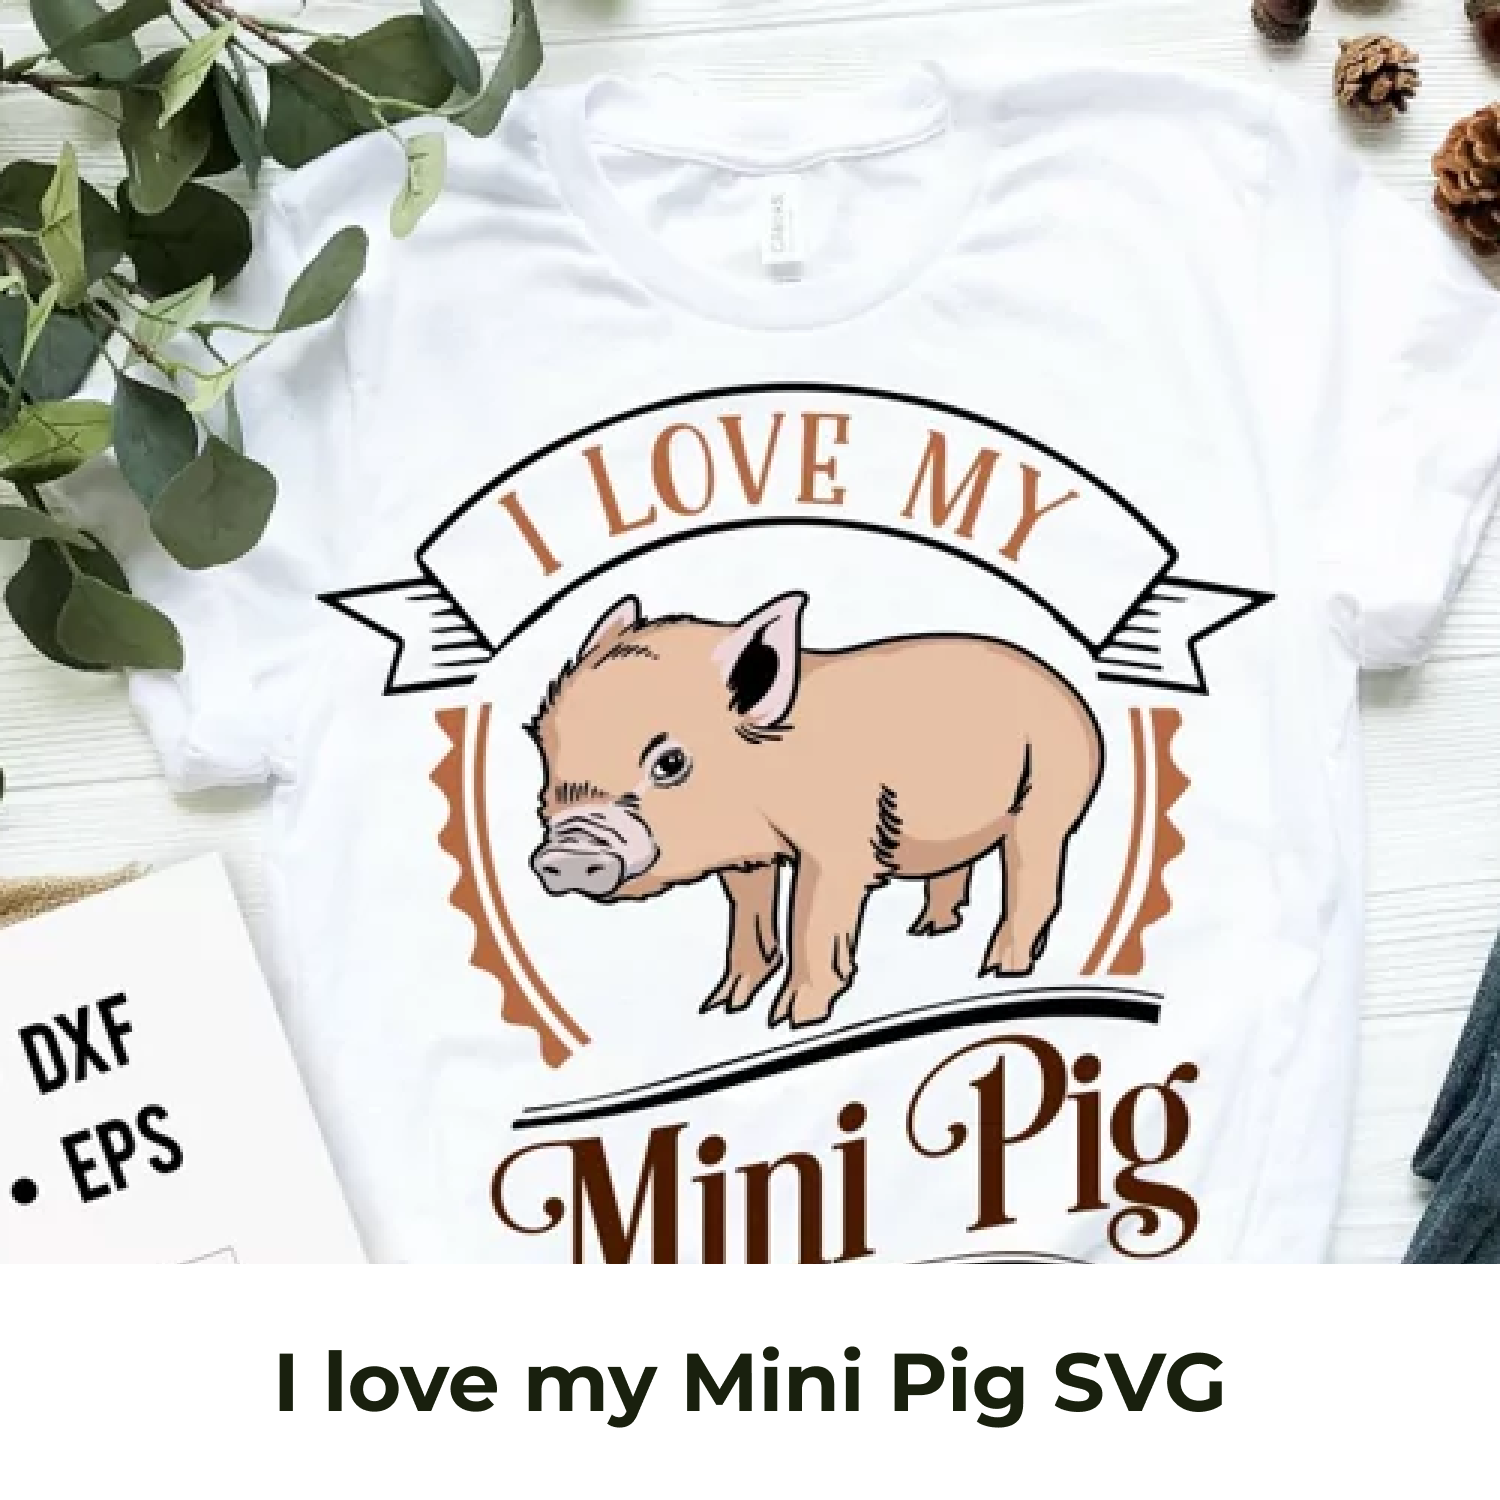 I love my Mini Pig SVG cover.